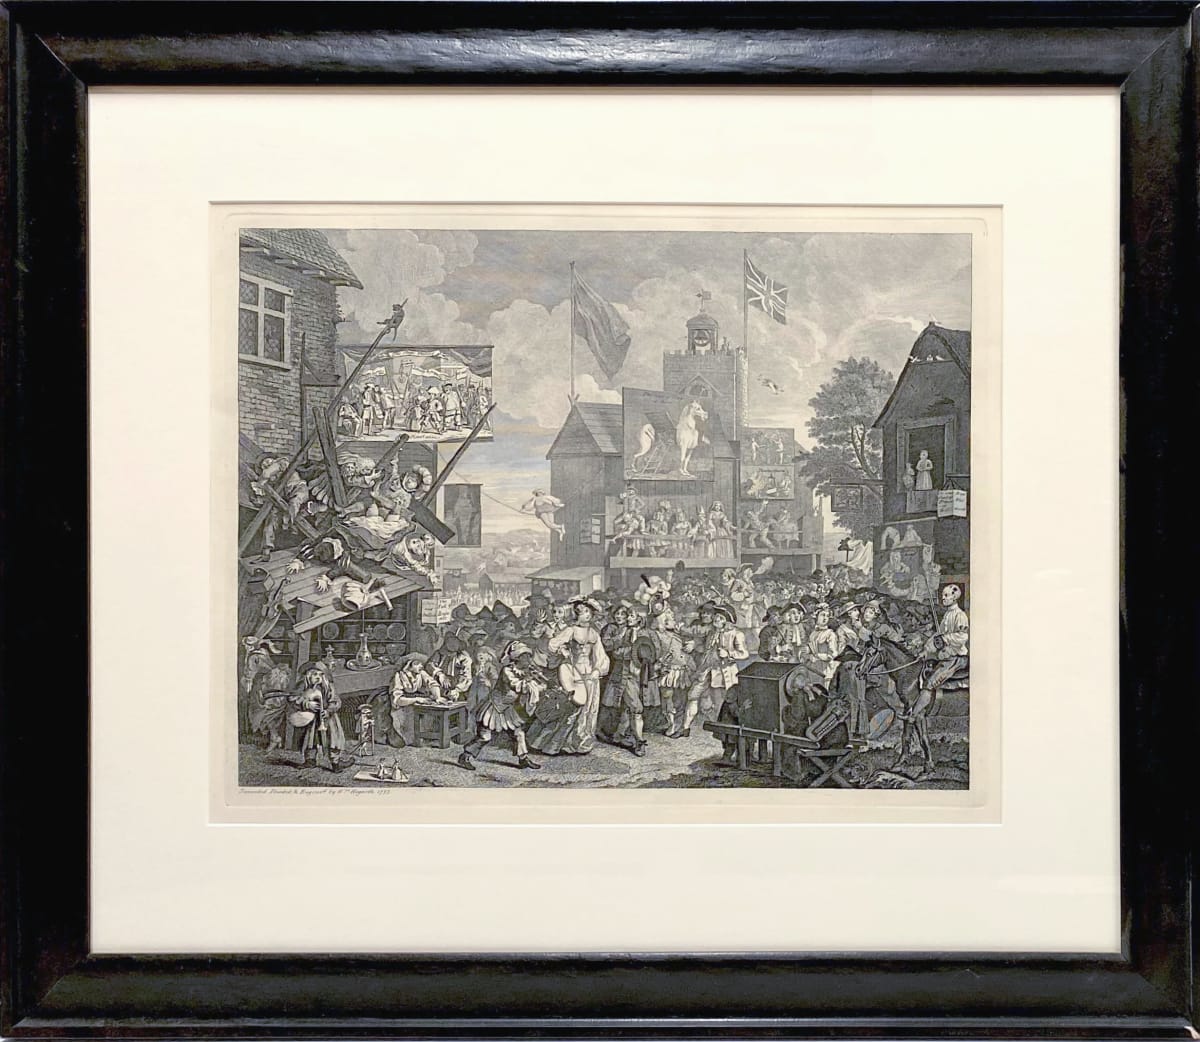 2712 - Southwark Fair 1755 by William Hogarth (1697 – 1764) 